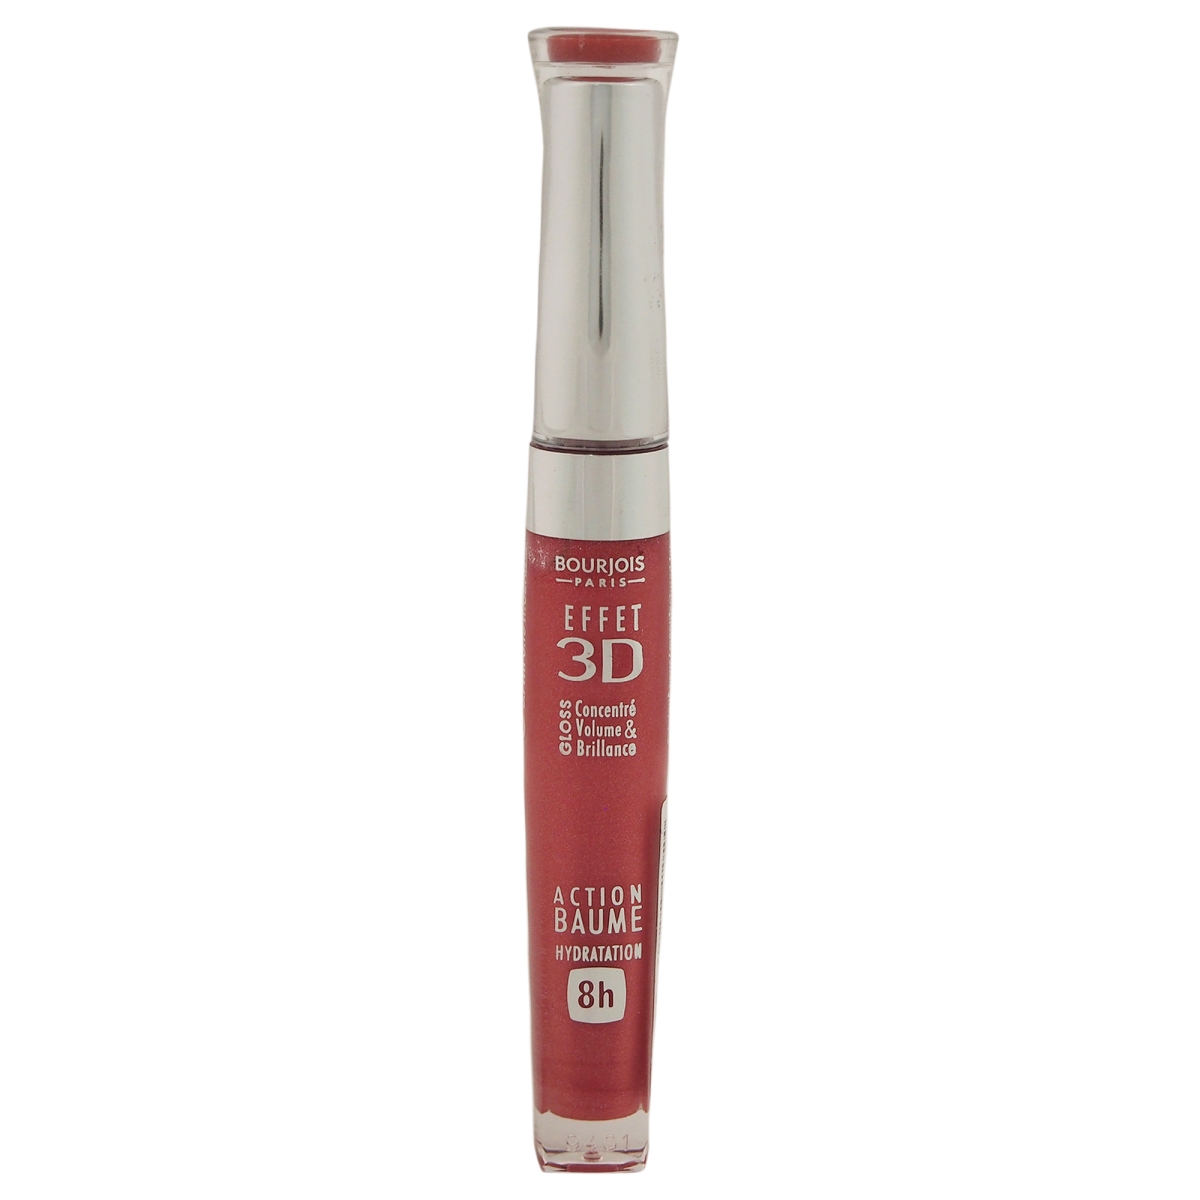 W-c-9321 0.19 Oz No. 05 3d Effet Rose Hypothetic Lip Gloss For Women